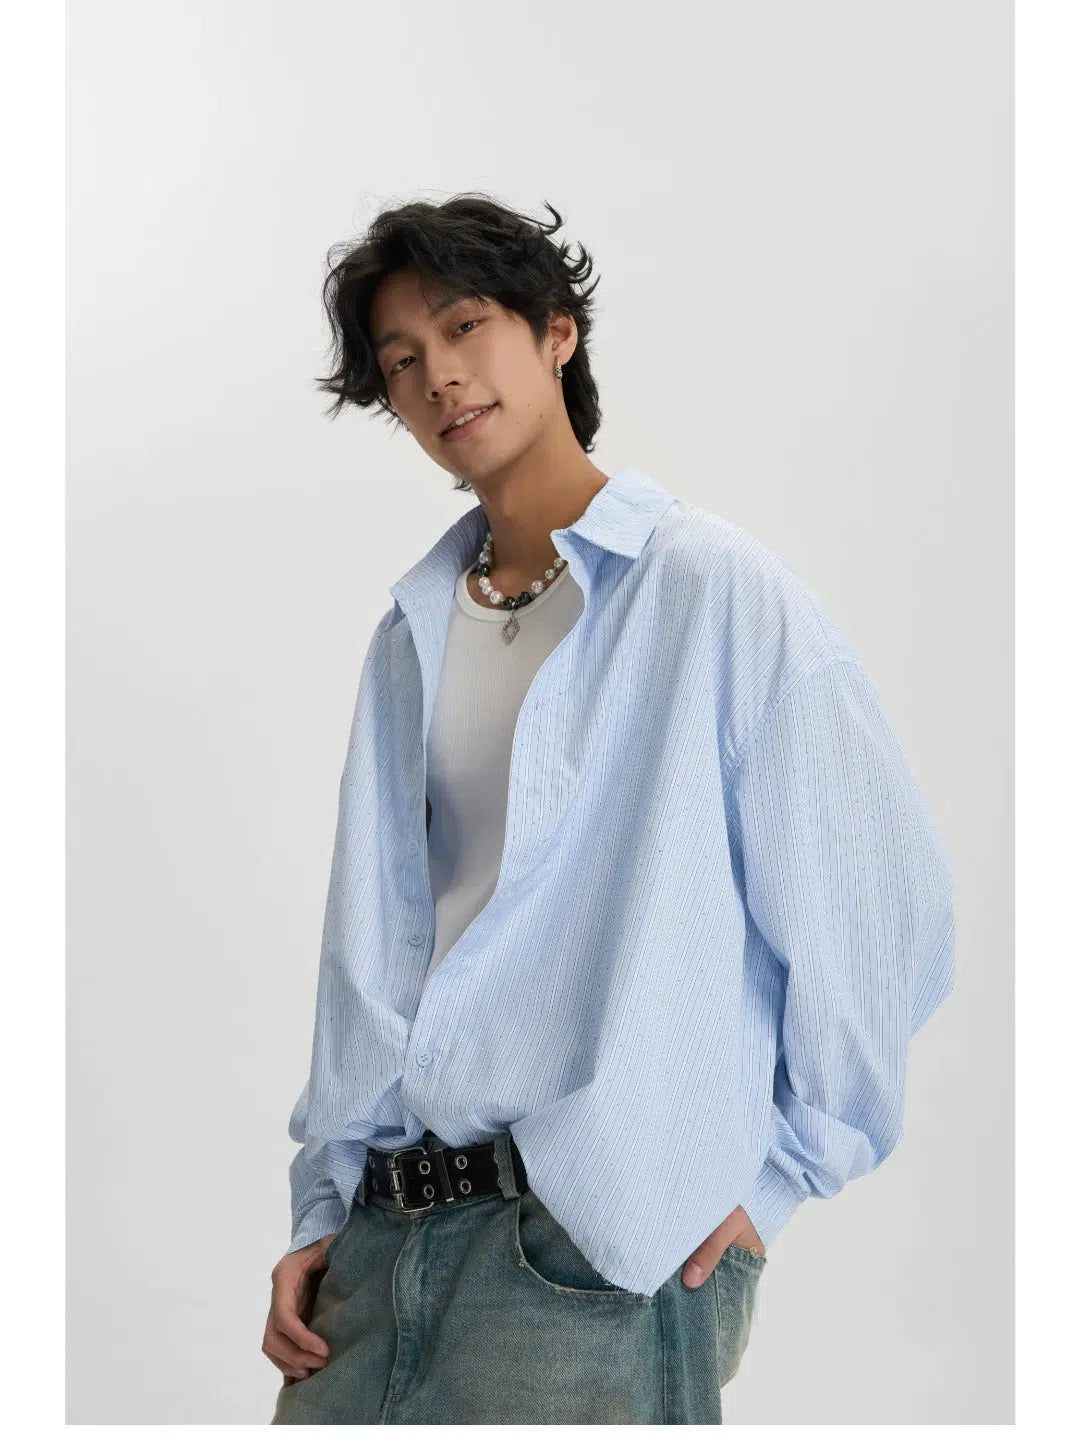 Rhinestones Thin Stripes Shirt Korean Street Fashion Shirt By JHYQ Shop Online at OH Vault